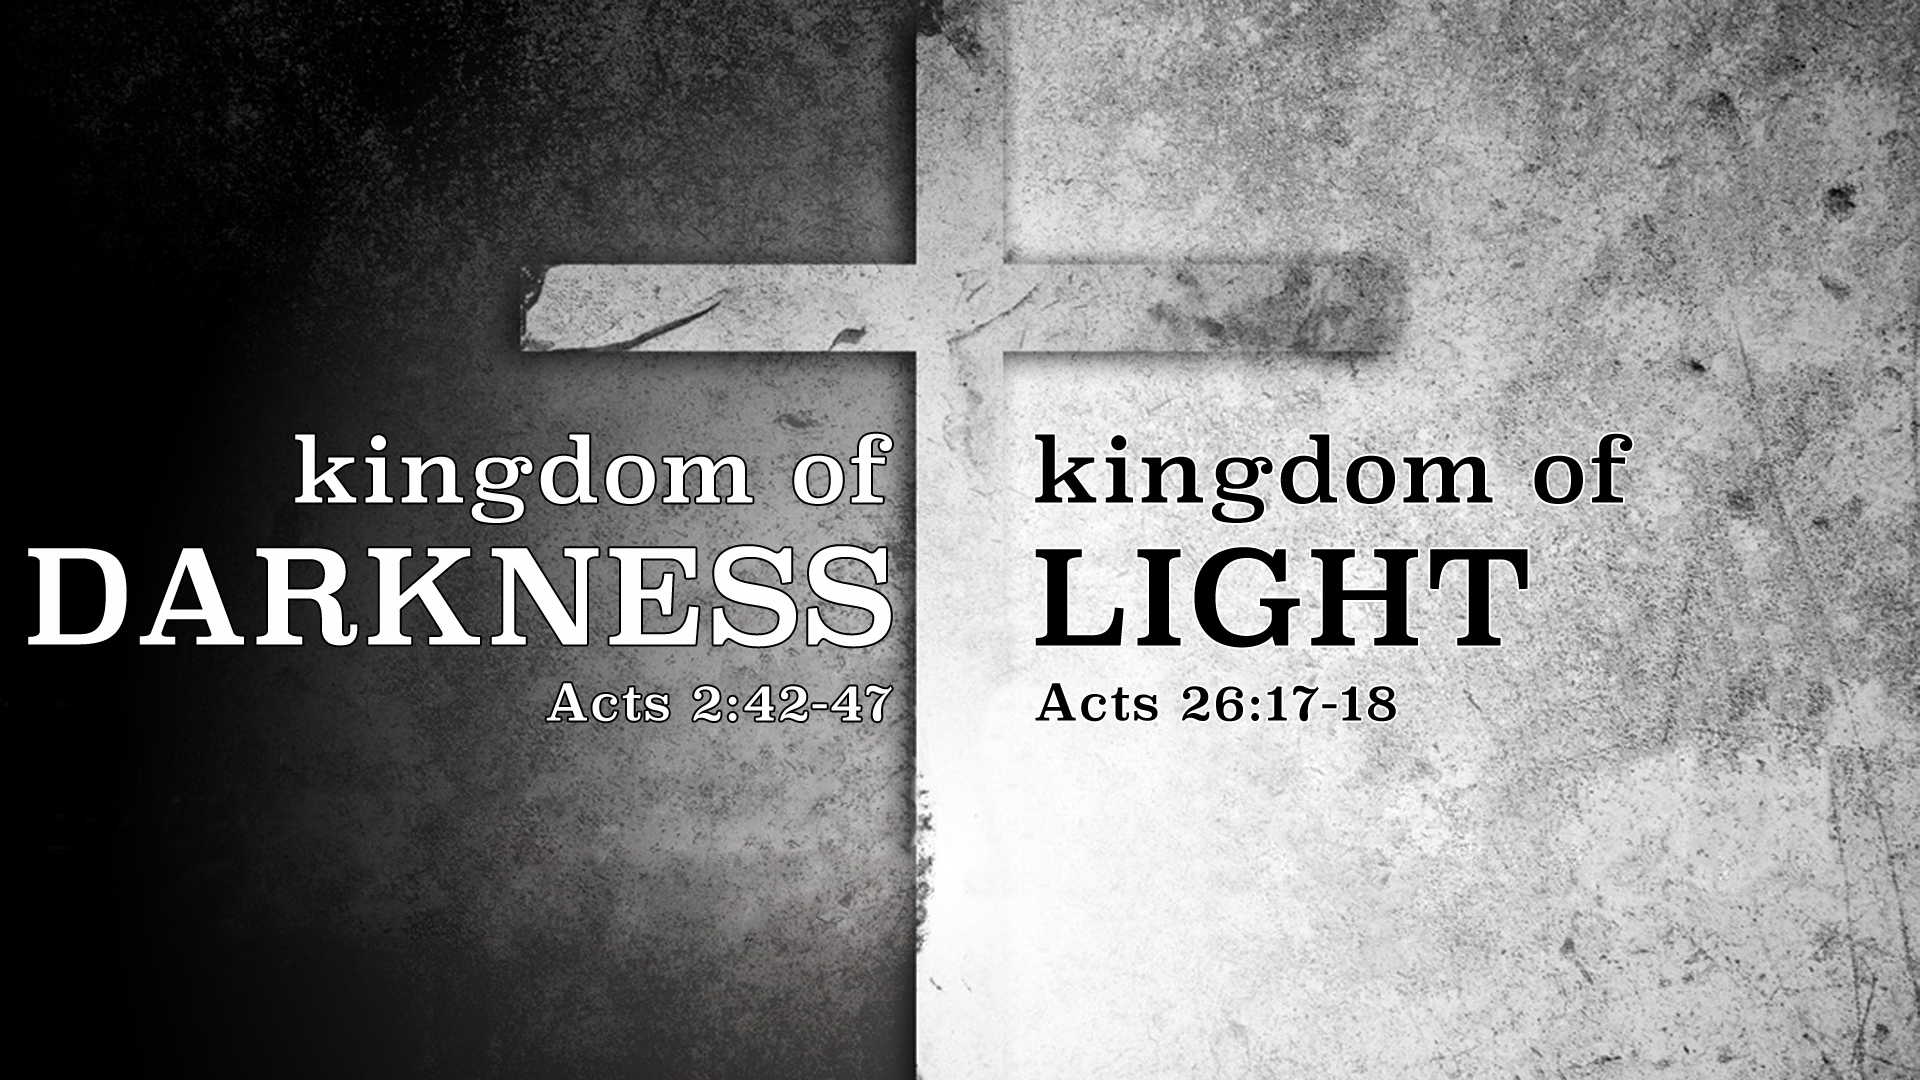 The Kingdom of Darkness vs the Kingdom of Light